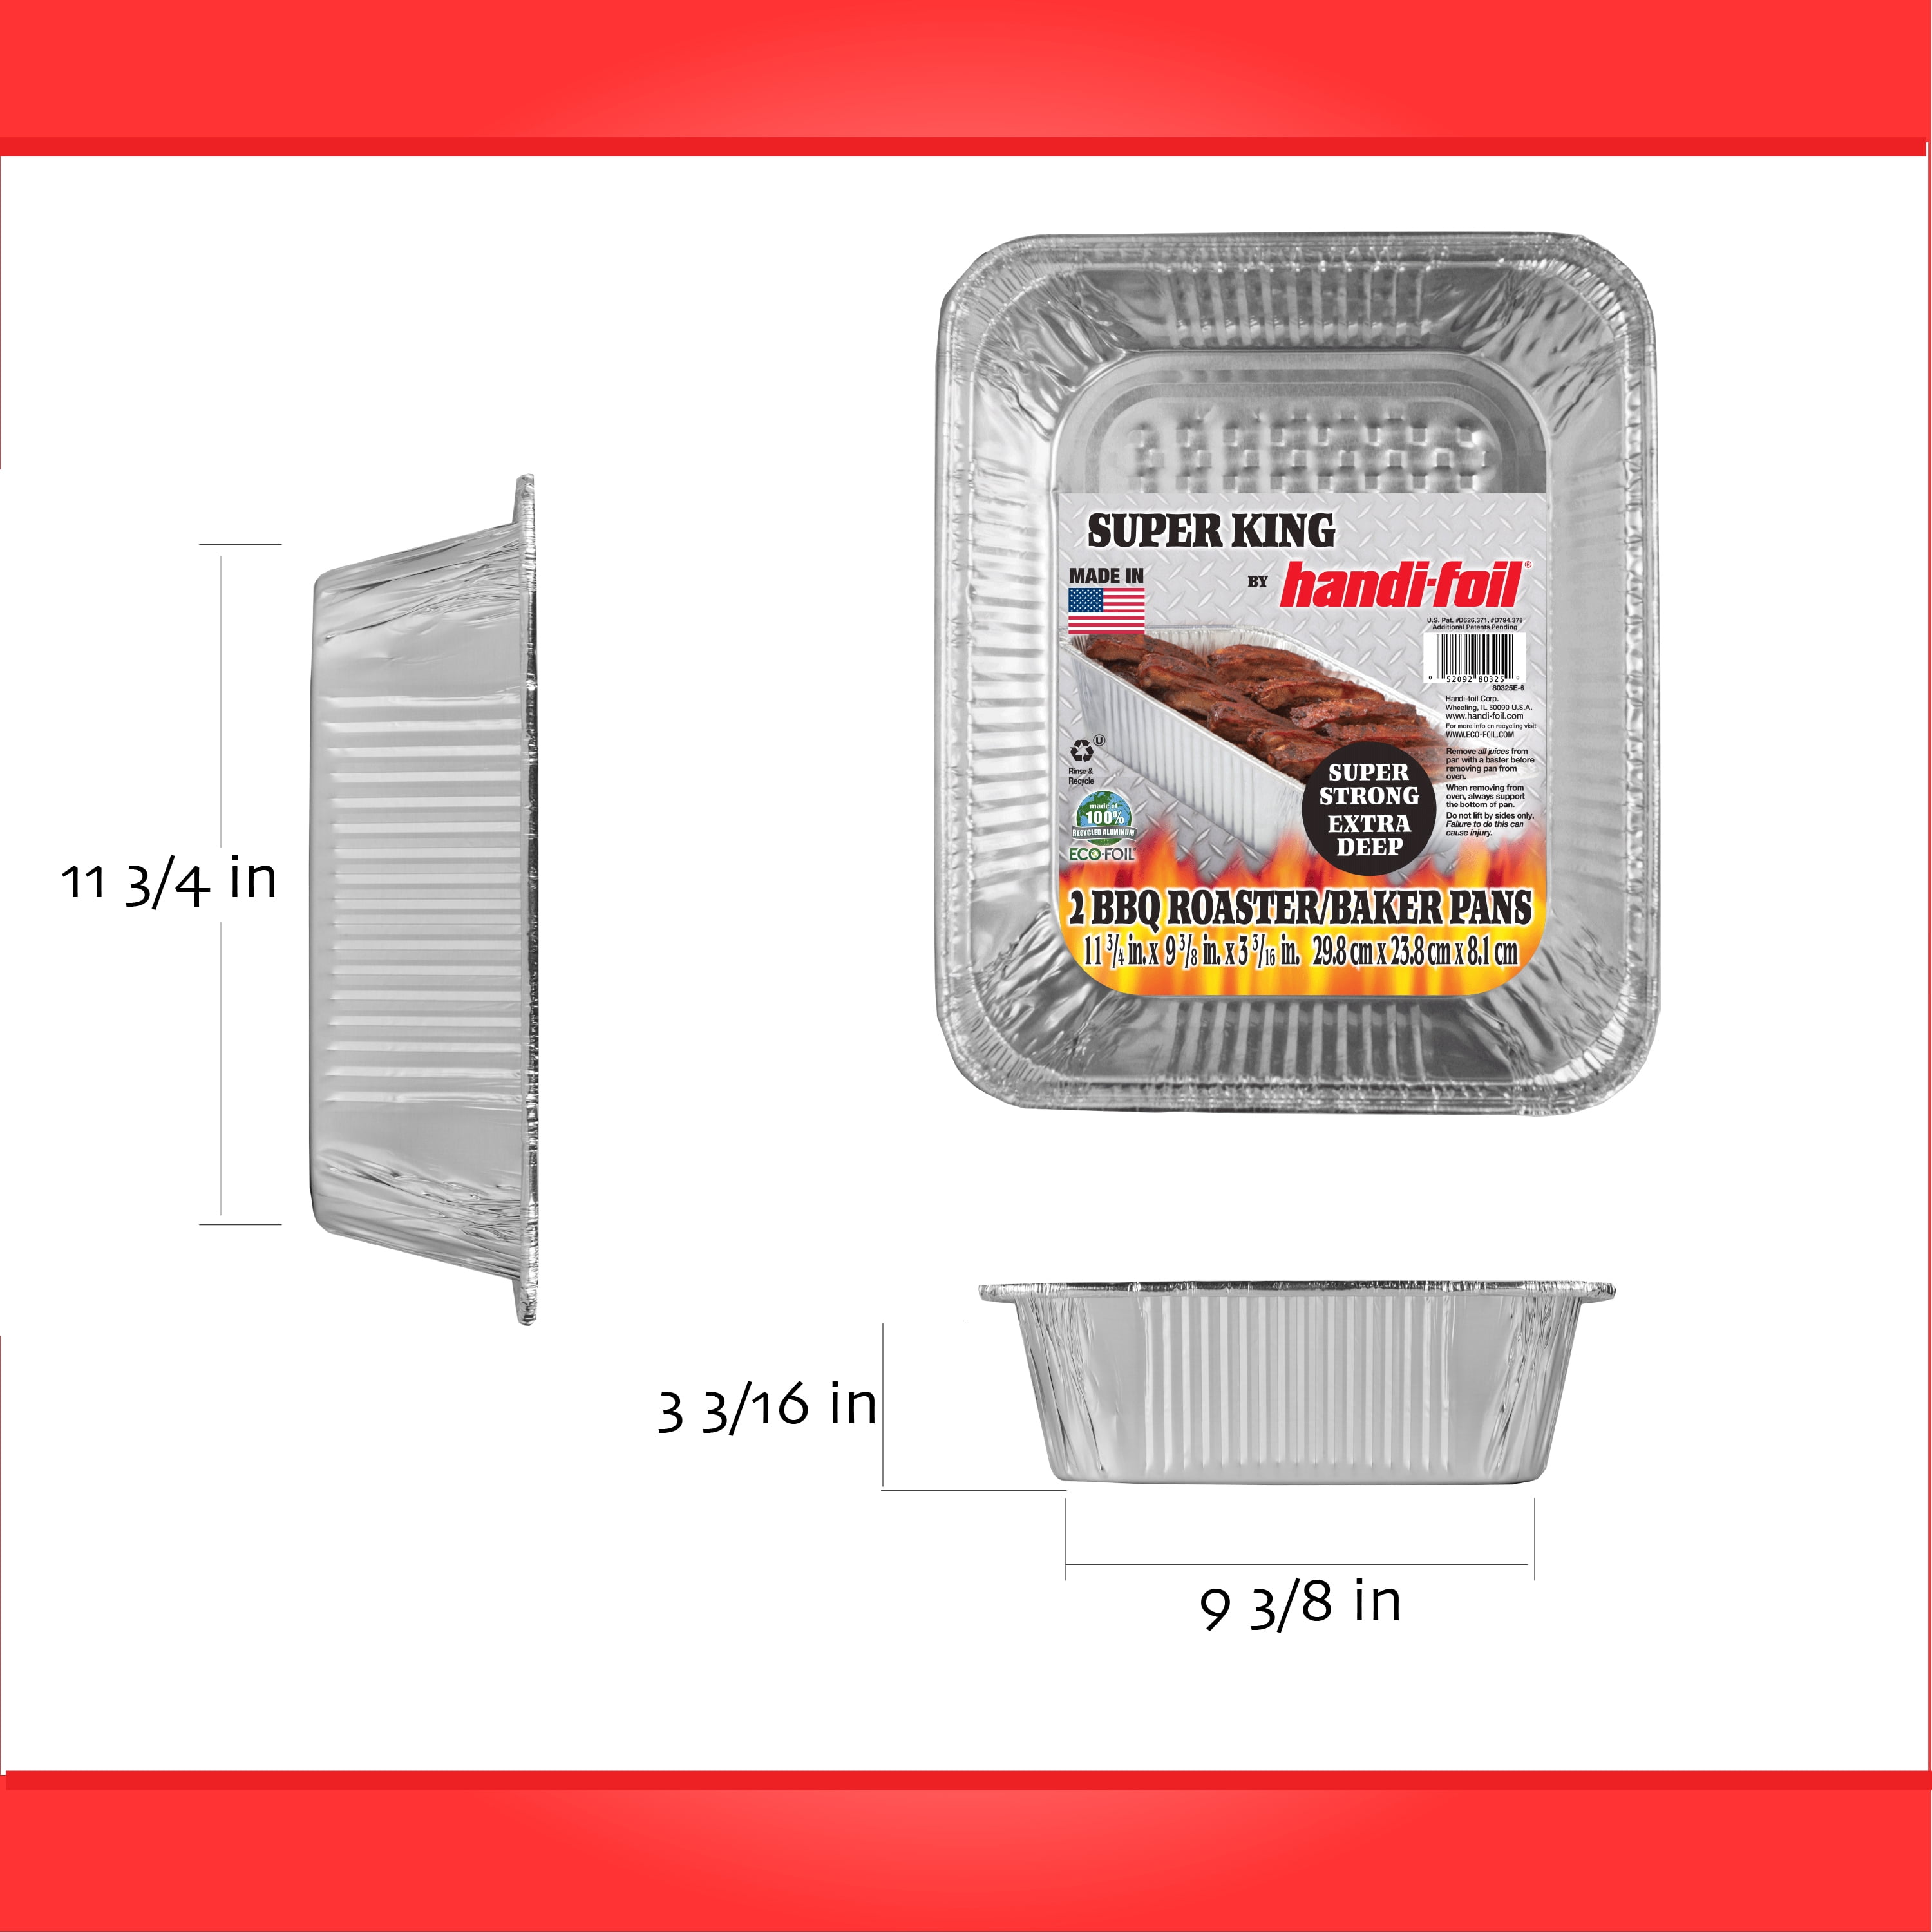 Handi-Foil Extra Deep Aluminum Super King Roaster Pan, 17.13x12.63x4.25  1 piece count 